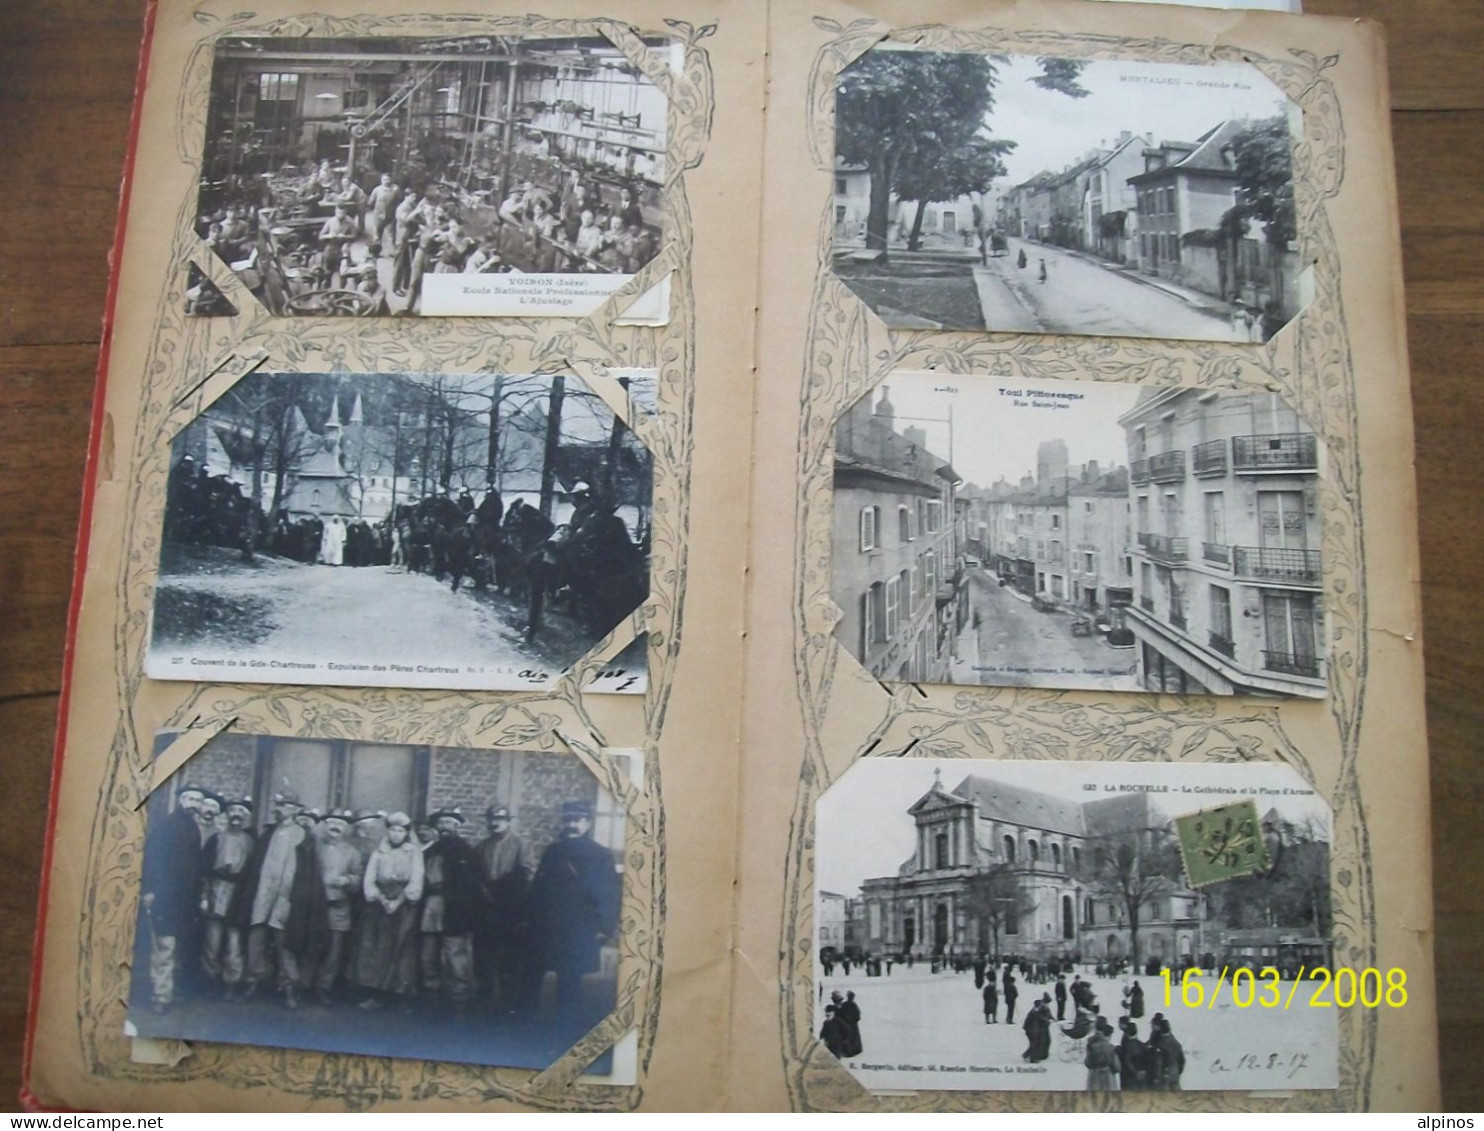 album de cartes postales anciennes